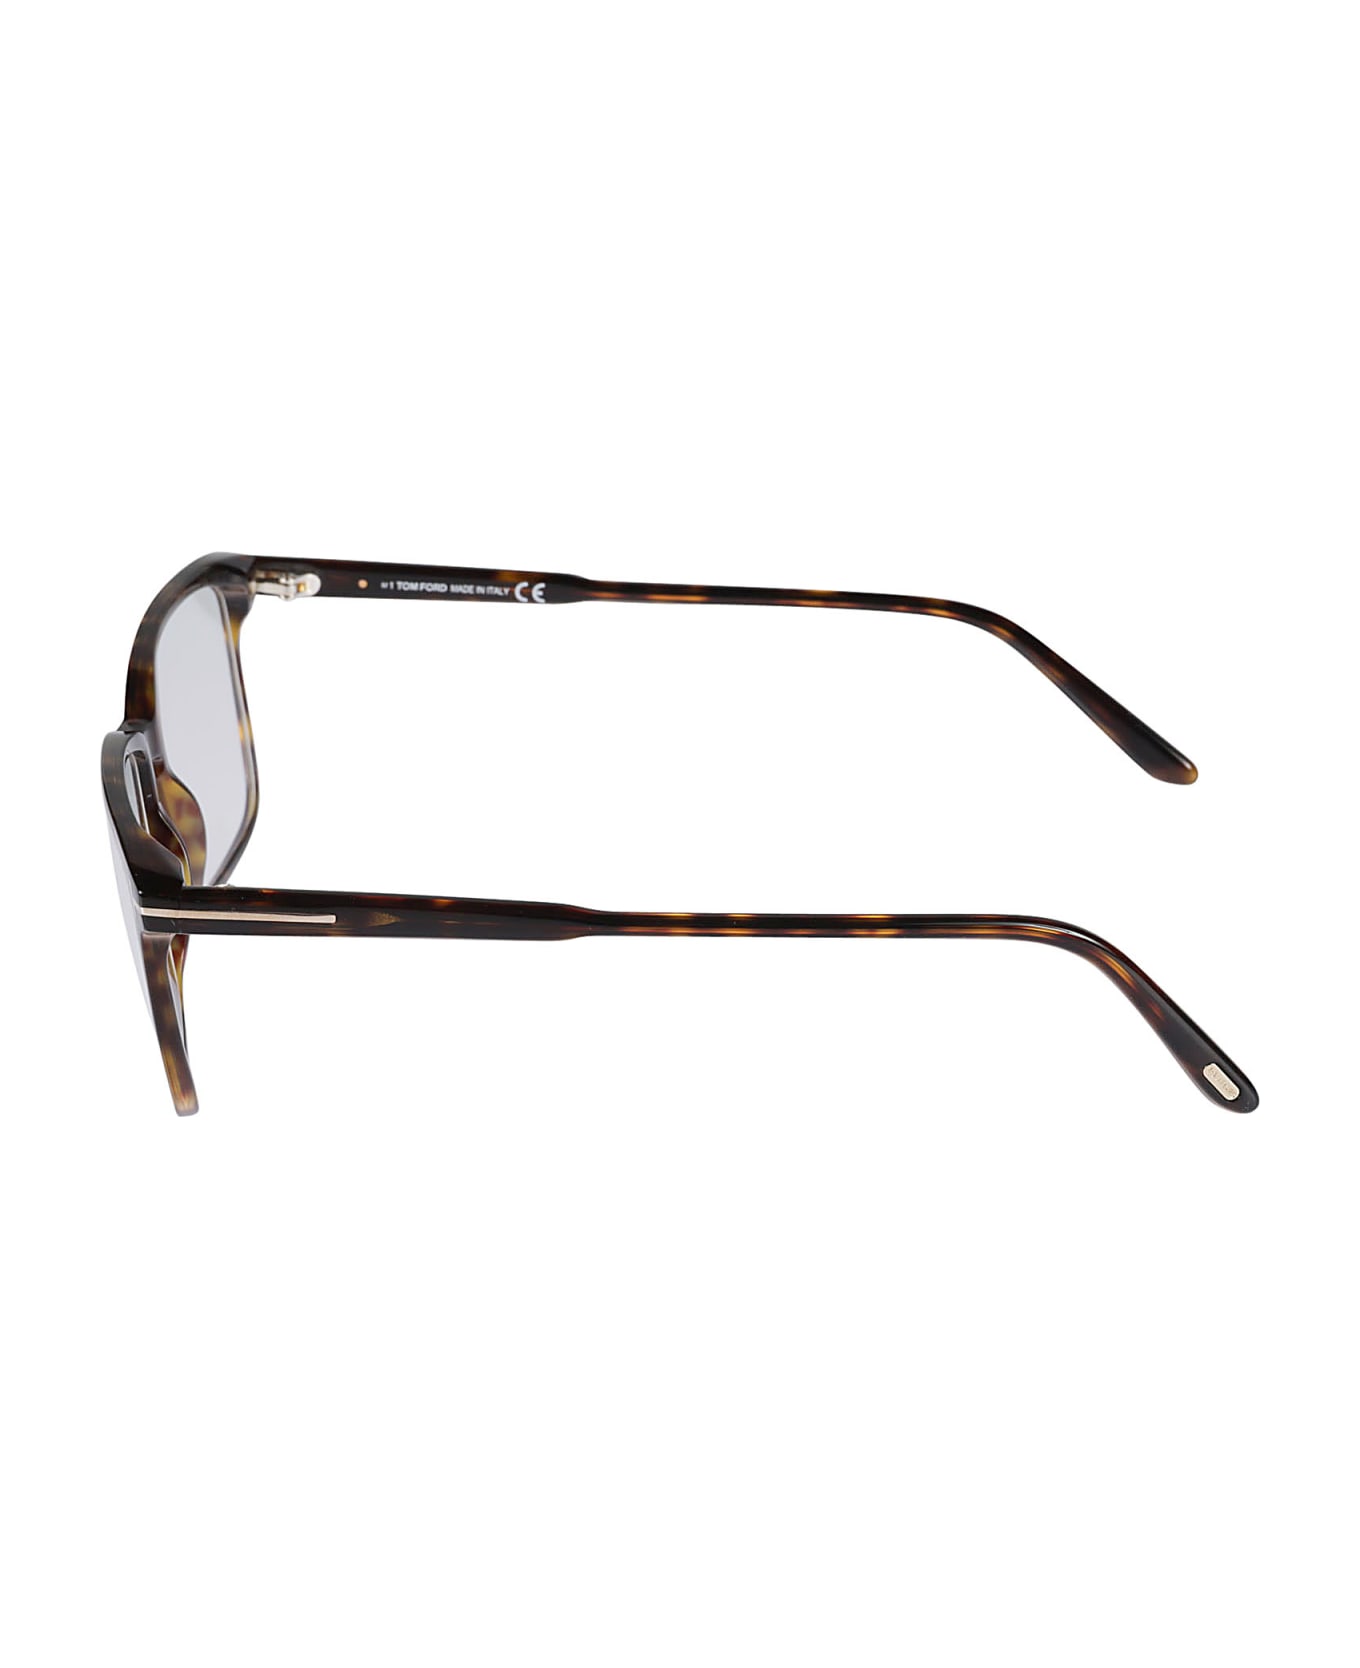 Tom Ford Eyewear Blue-light Block Glasses - 052